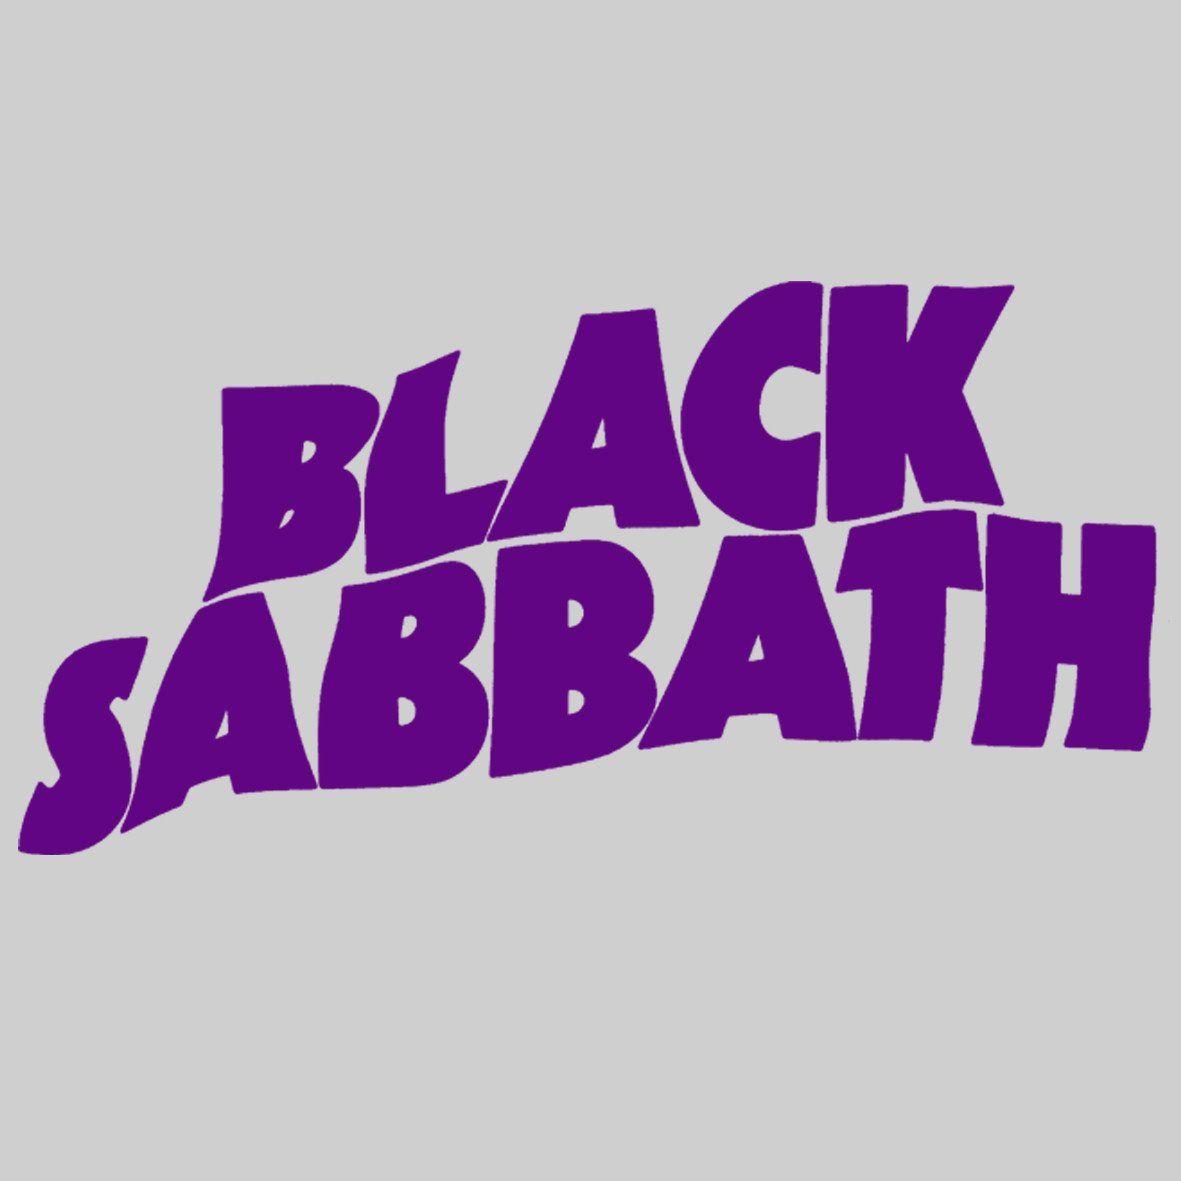 Black Sabbath Logo - Black Sabbath logo